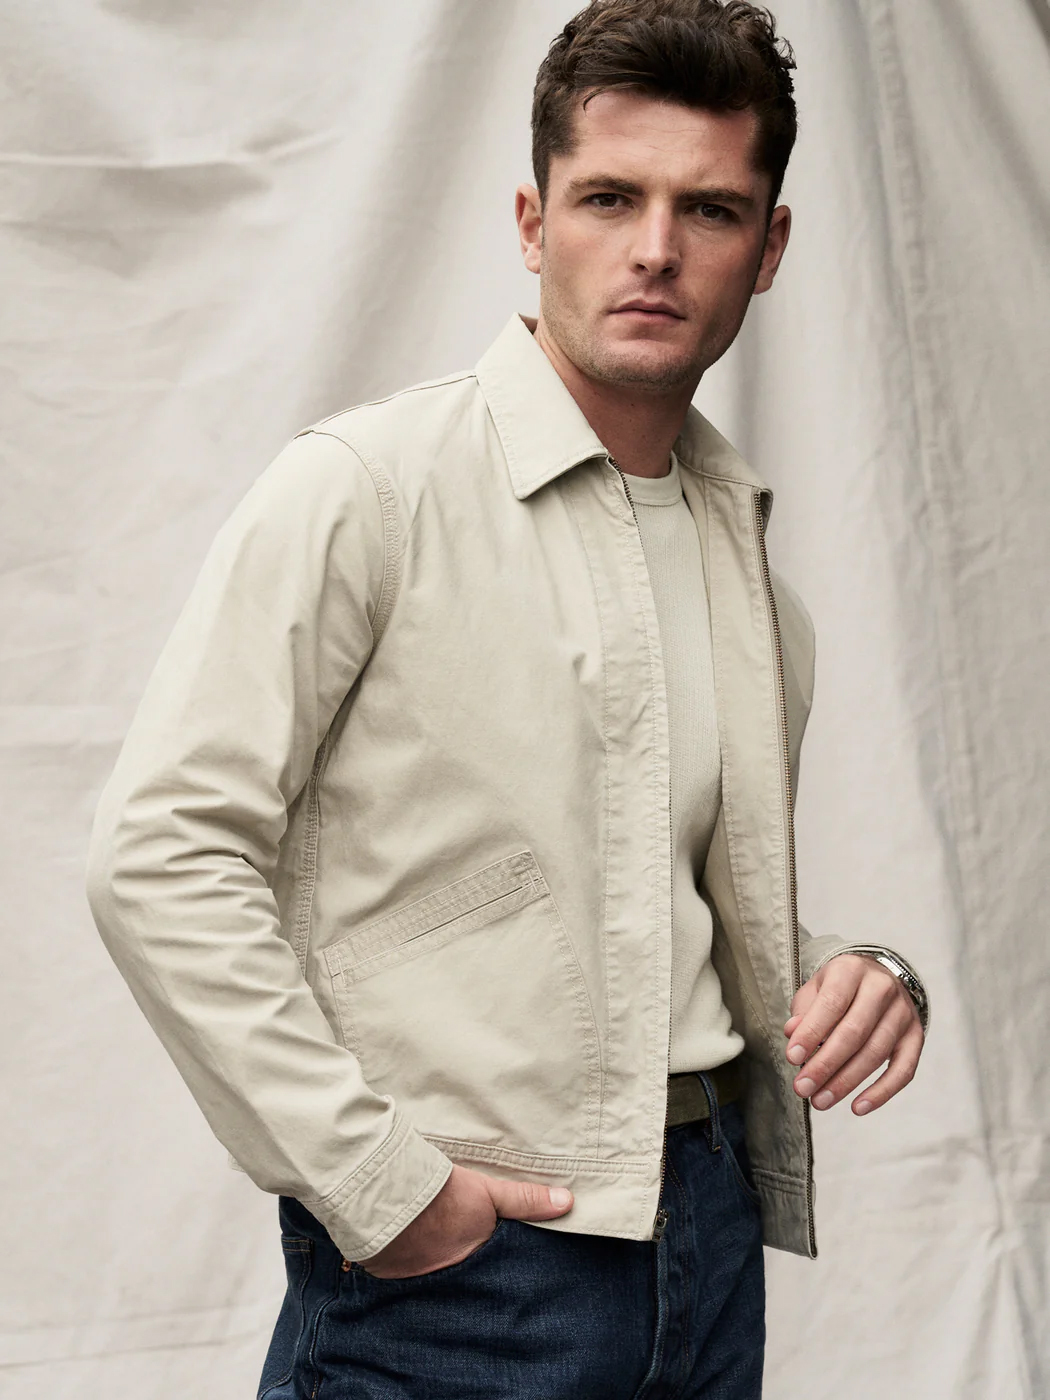 A model wearing a Buck Mason sustainable jacket for men